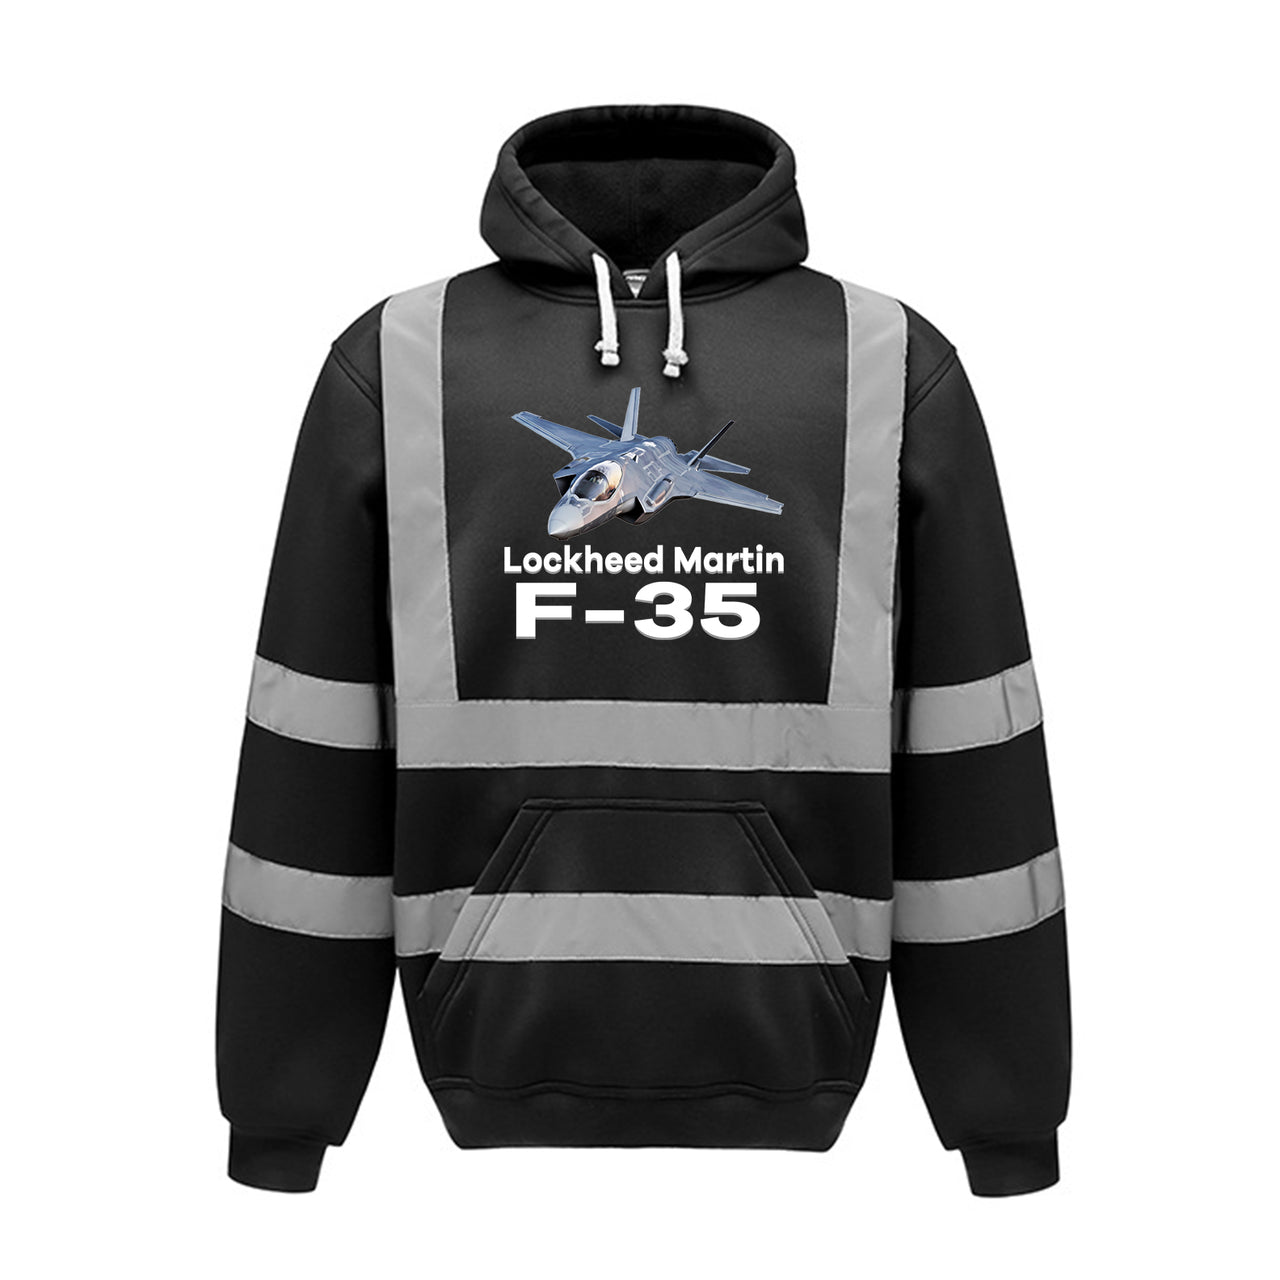 The Lockheed Martin F35 Designed Reflective Hoodies